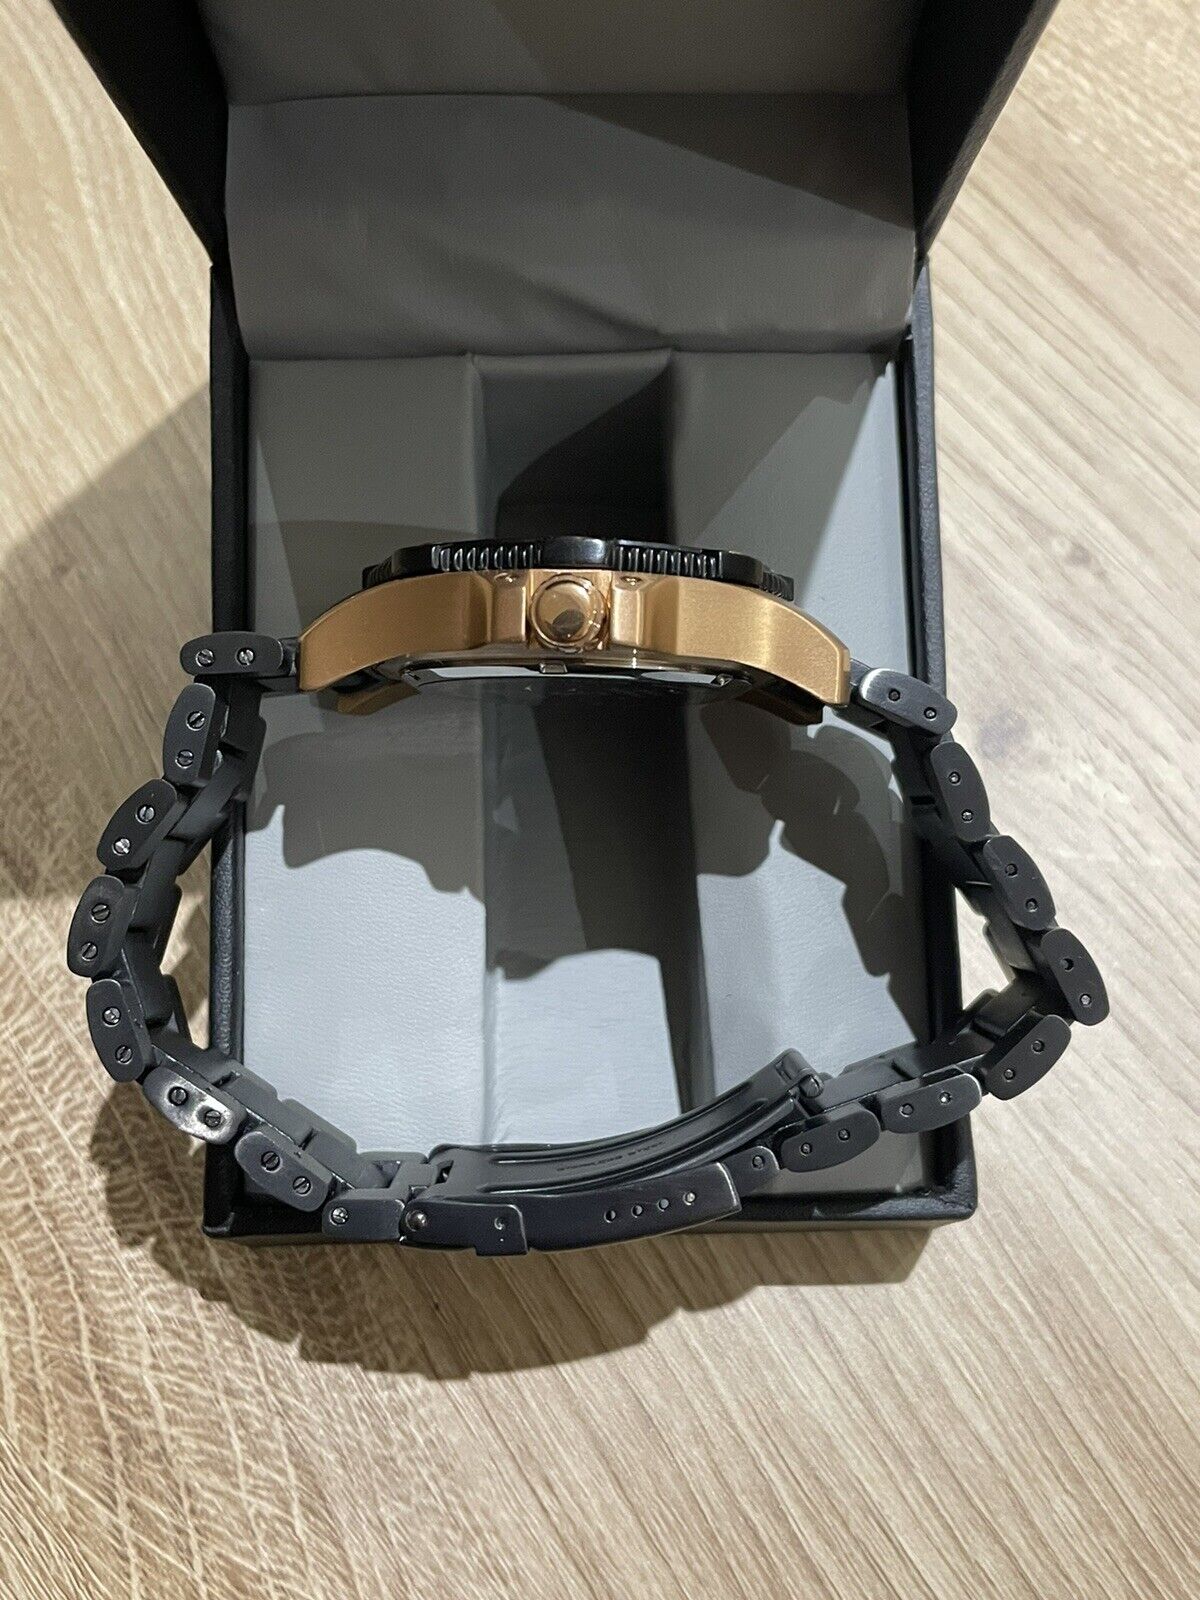 New Fusion FUS07 mens Quartz wristwatch black stainless - Westies Watches